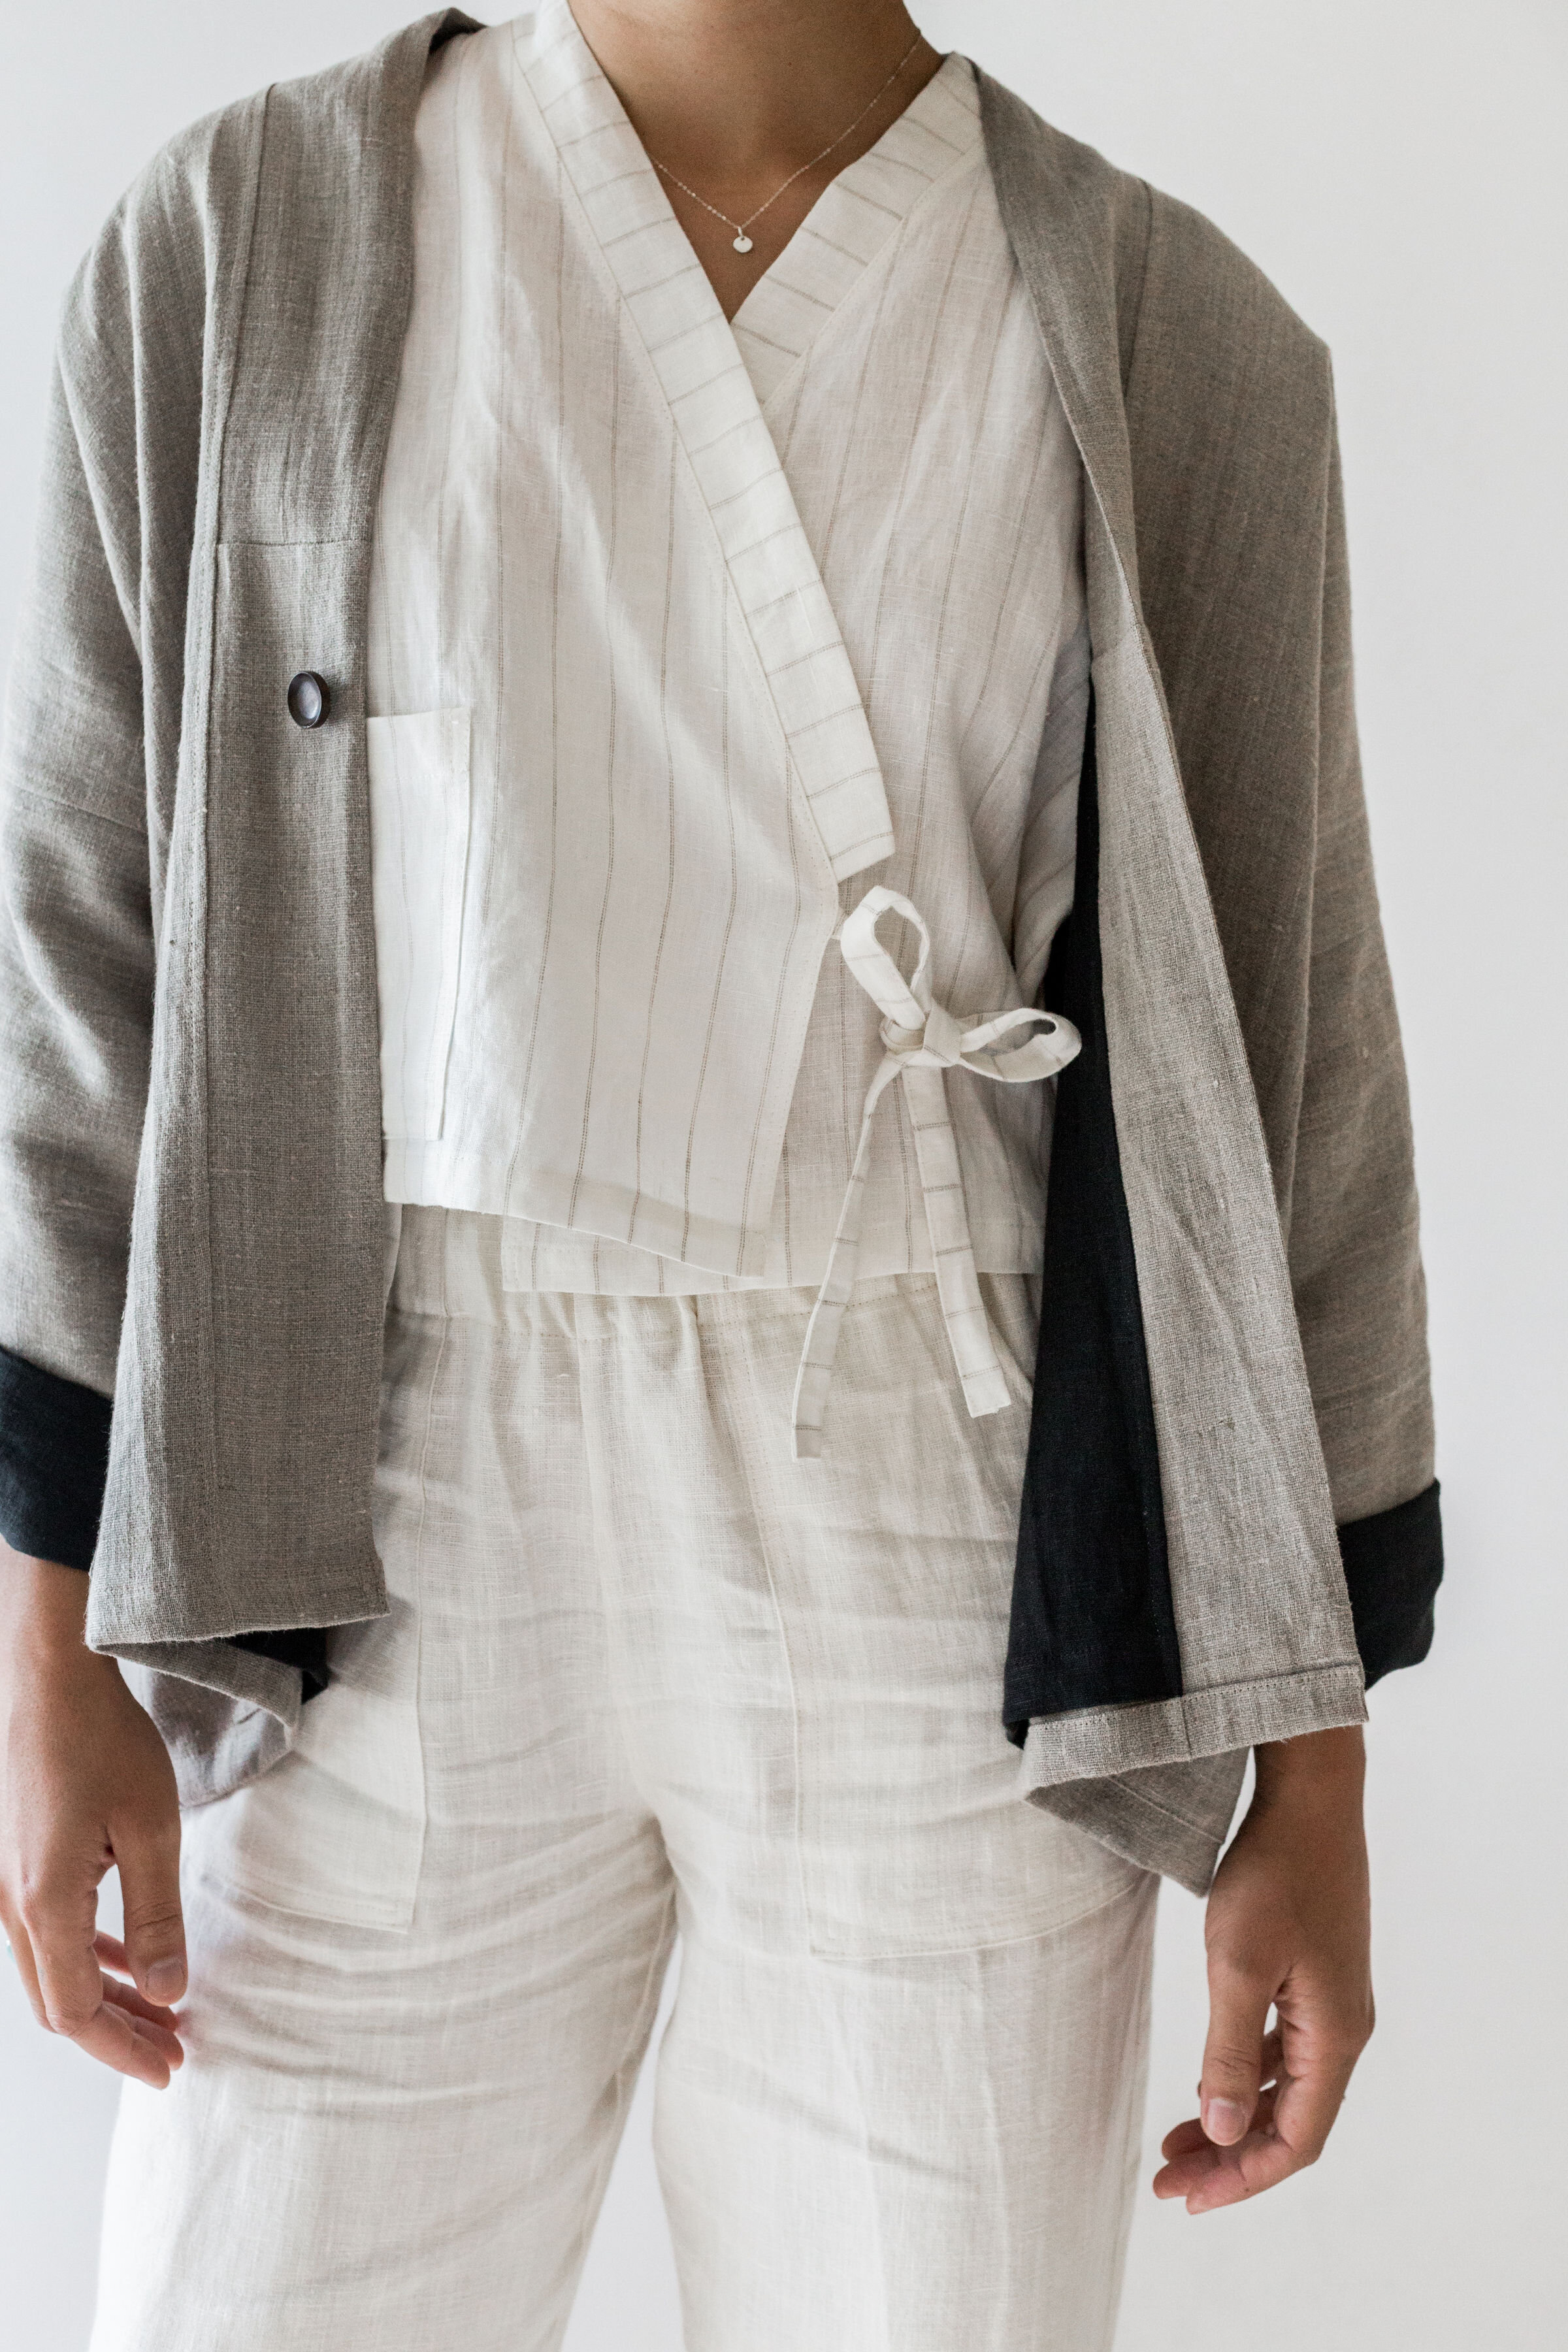 Nomi Designs women linen clothing jacket pants and top.jpg